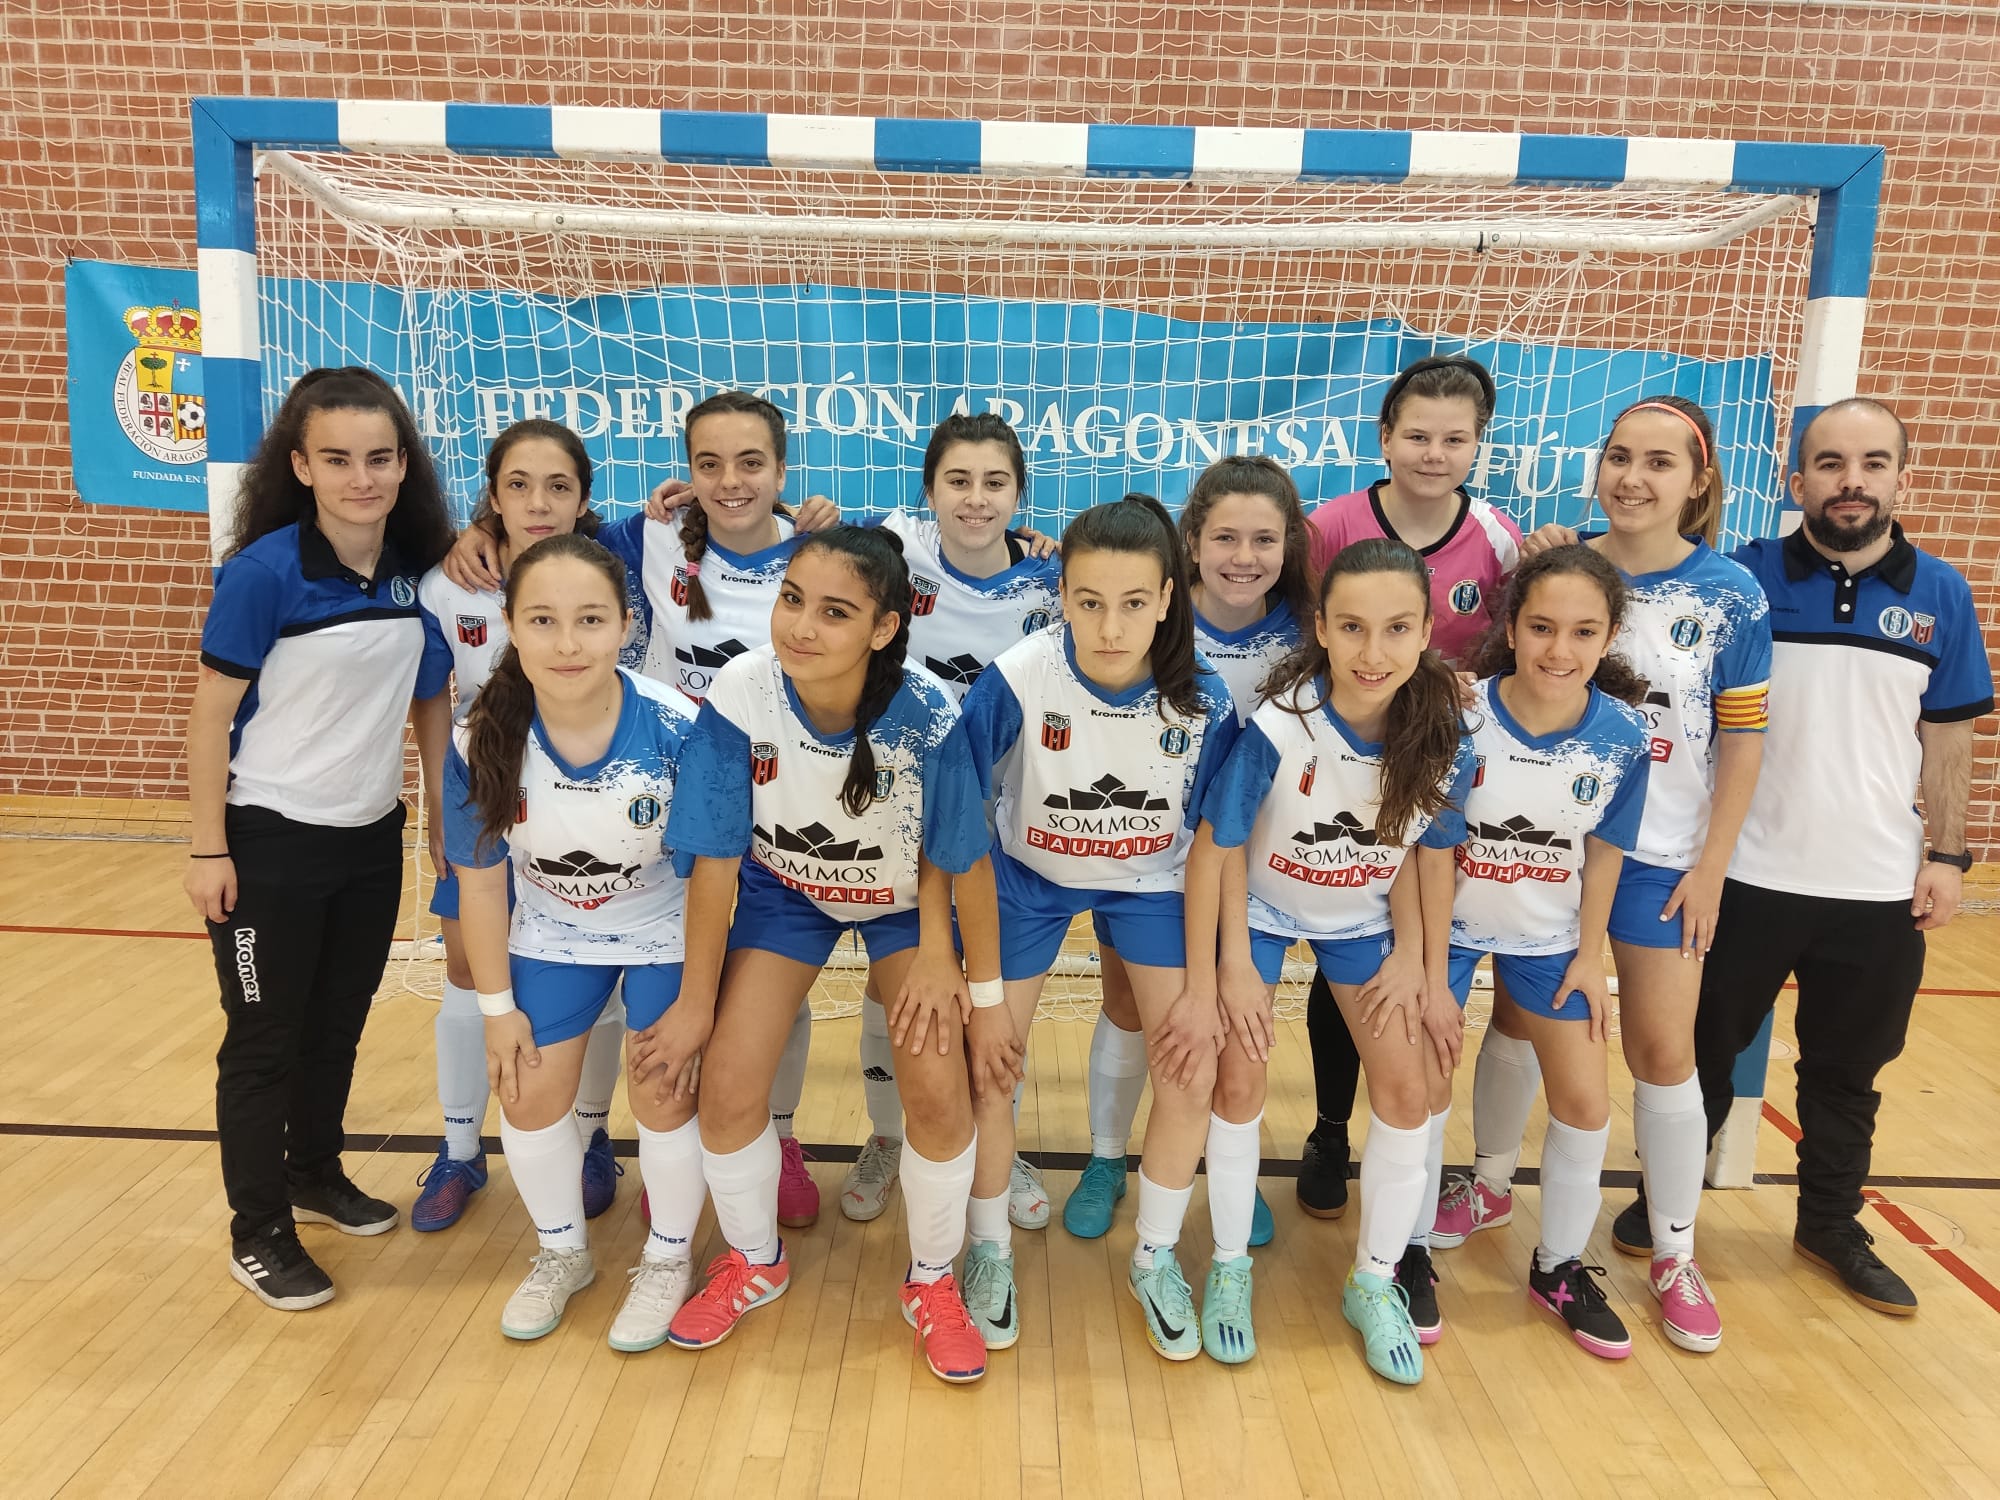 La Cigüeña 4-0 InterSala10 Zaragoza La Bombarda (Infantil Femenino) – Final Campeonato de Aragón